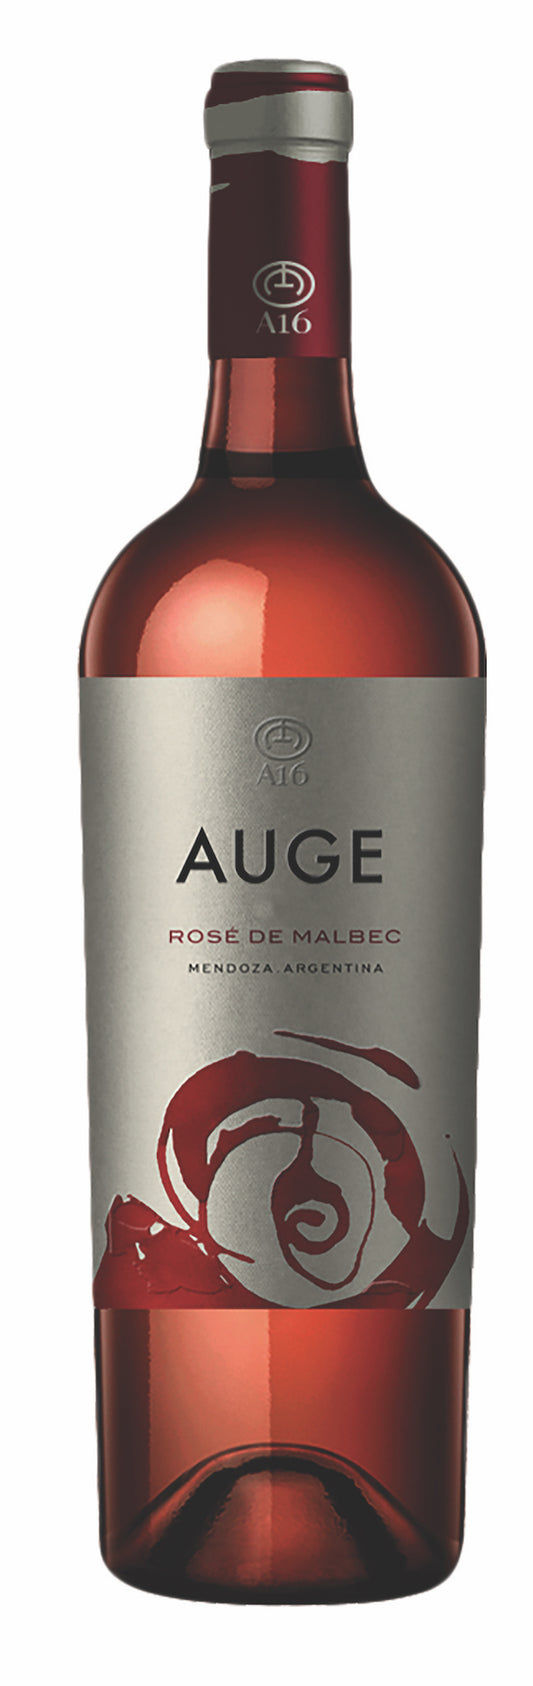 A16 AUGE Malbec (Rosé) - Mi-bodeguita.com